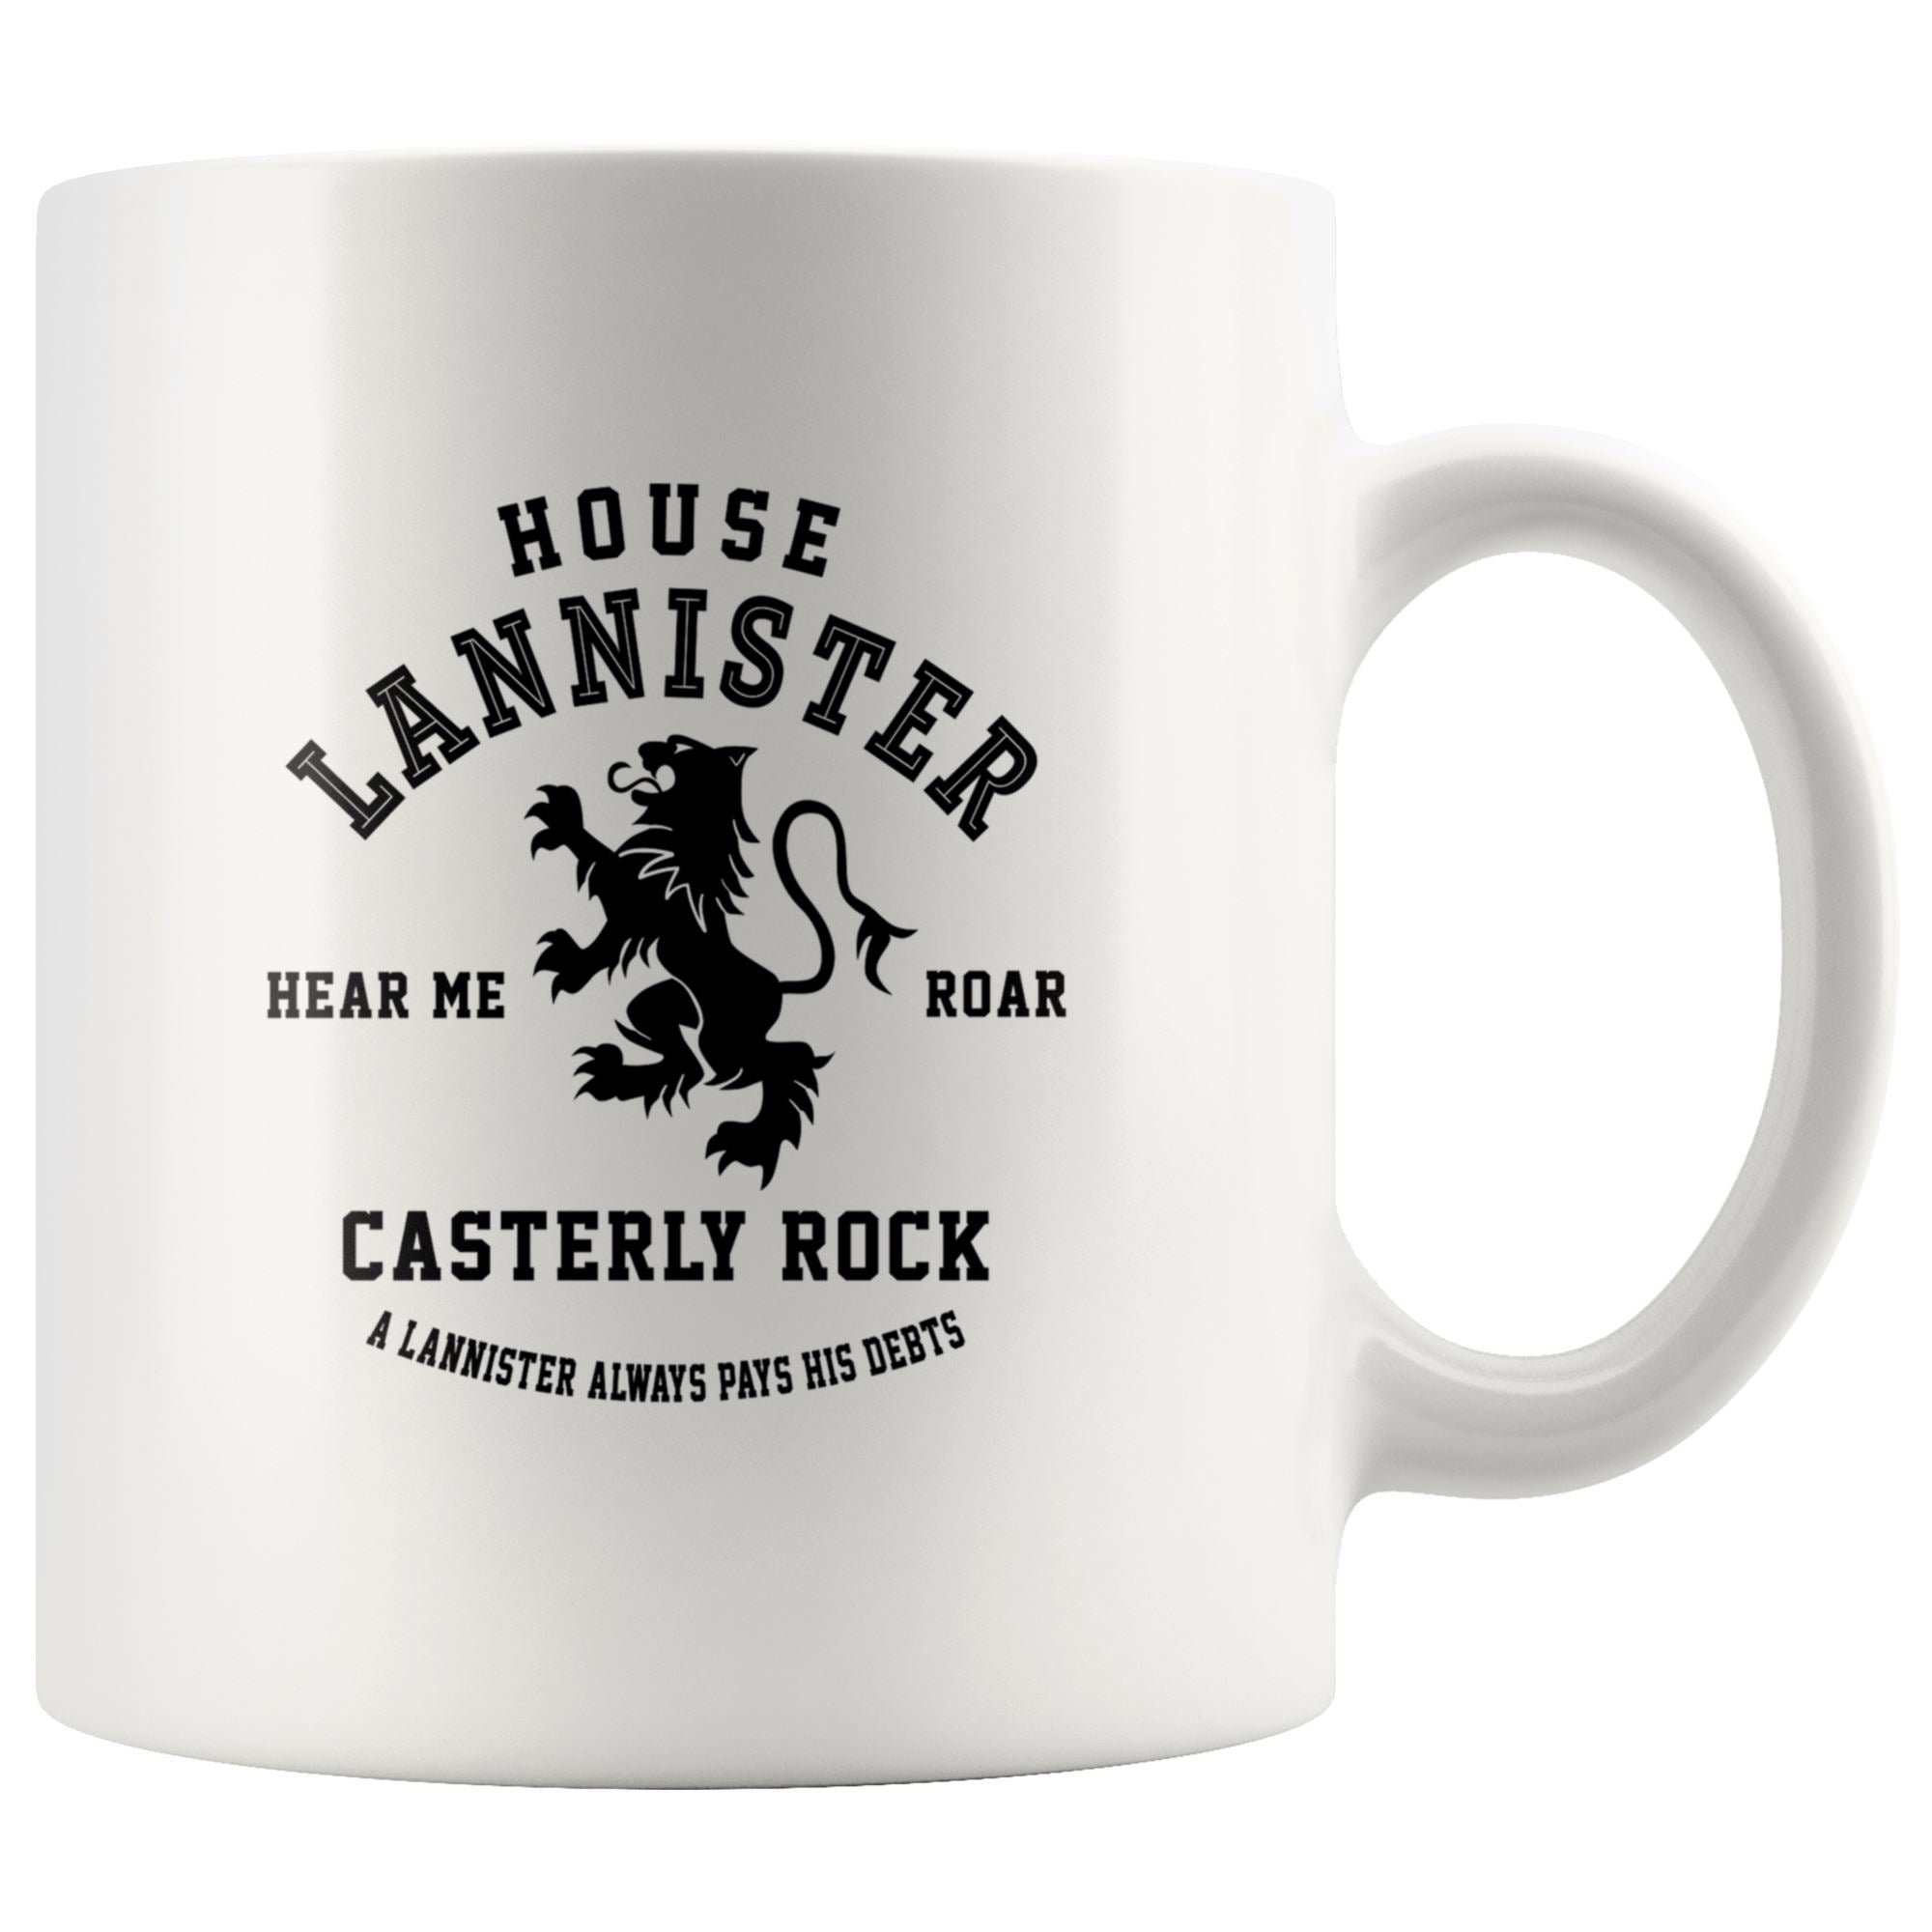 Lannister House Drinkware teelaunch 11oz Mug 